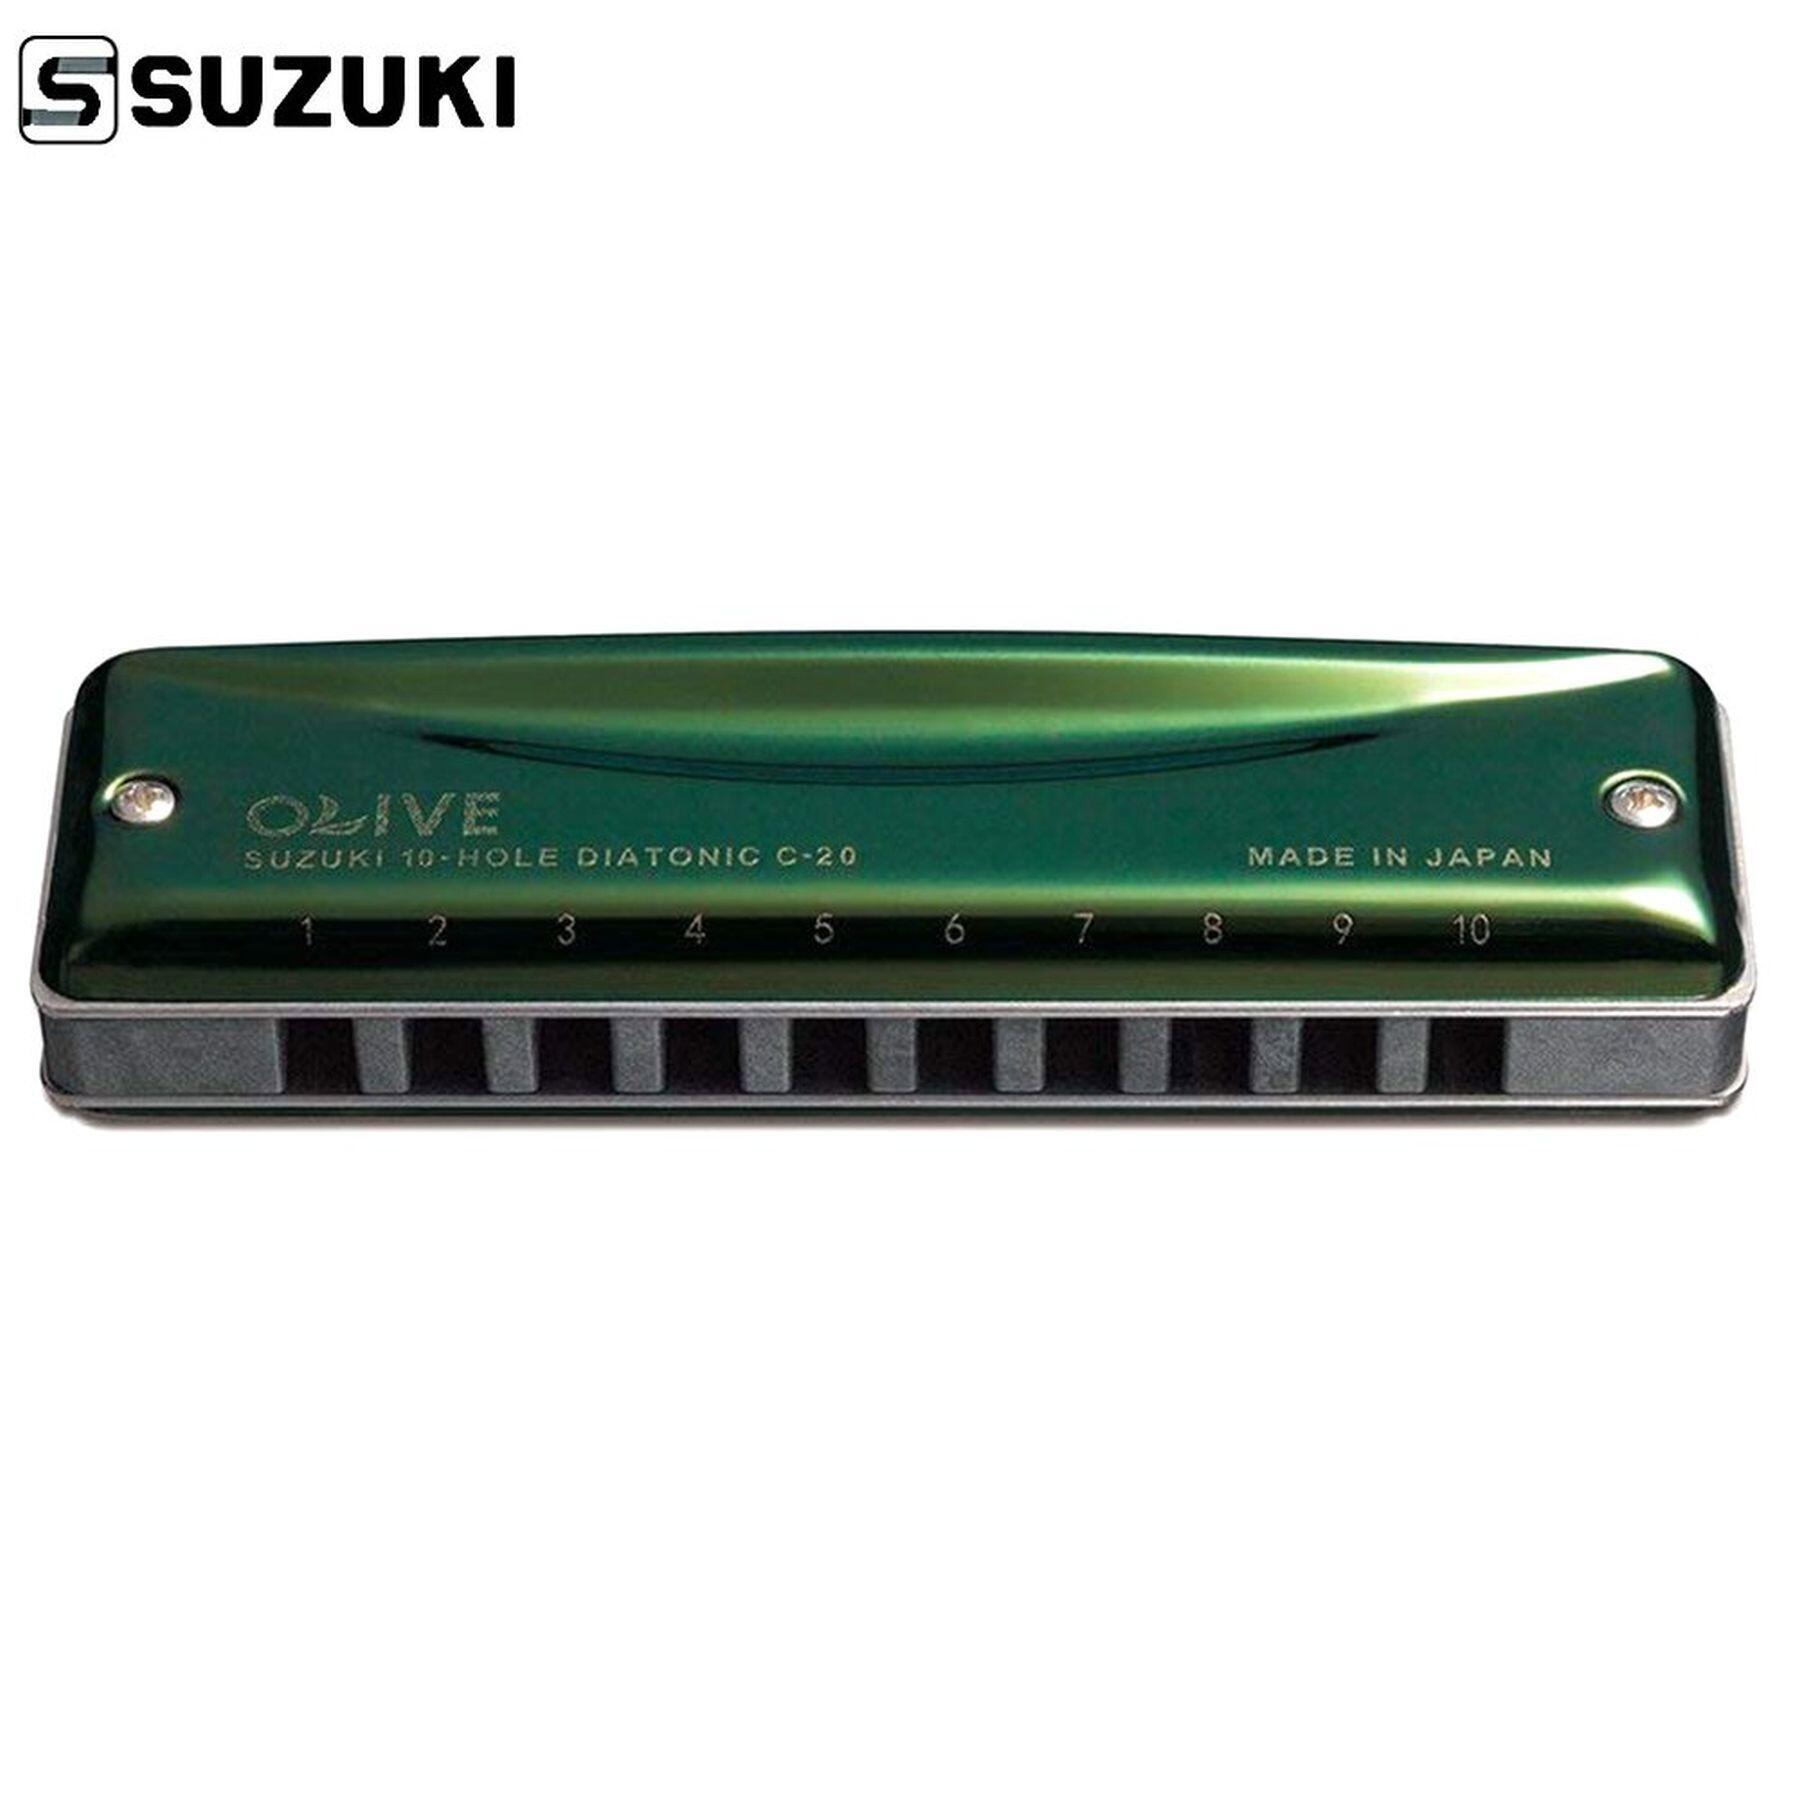 Suzuki C-20 Olive C : photo 1